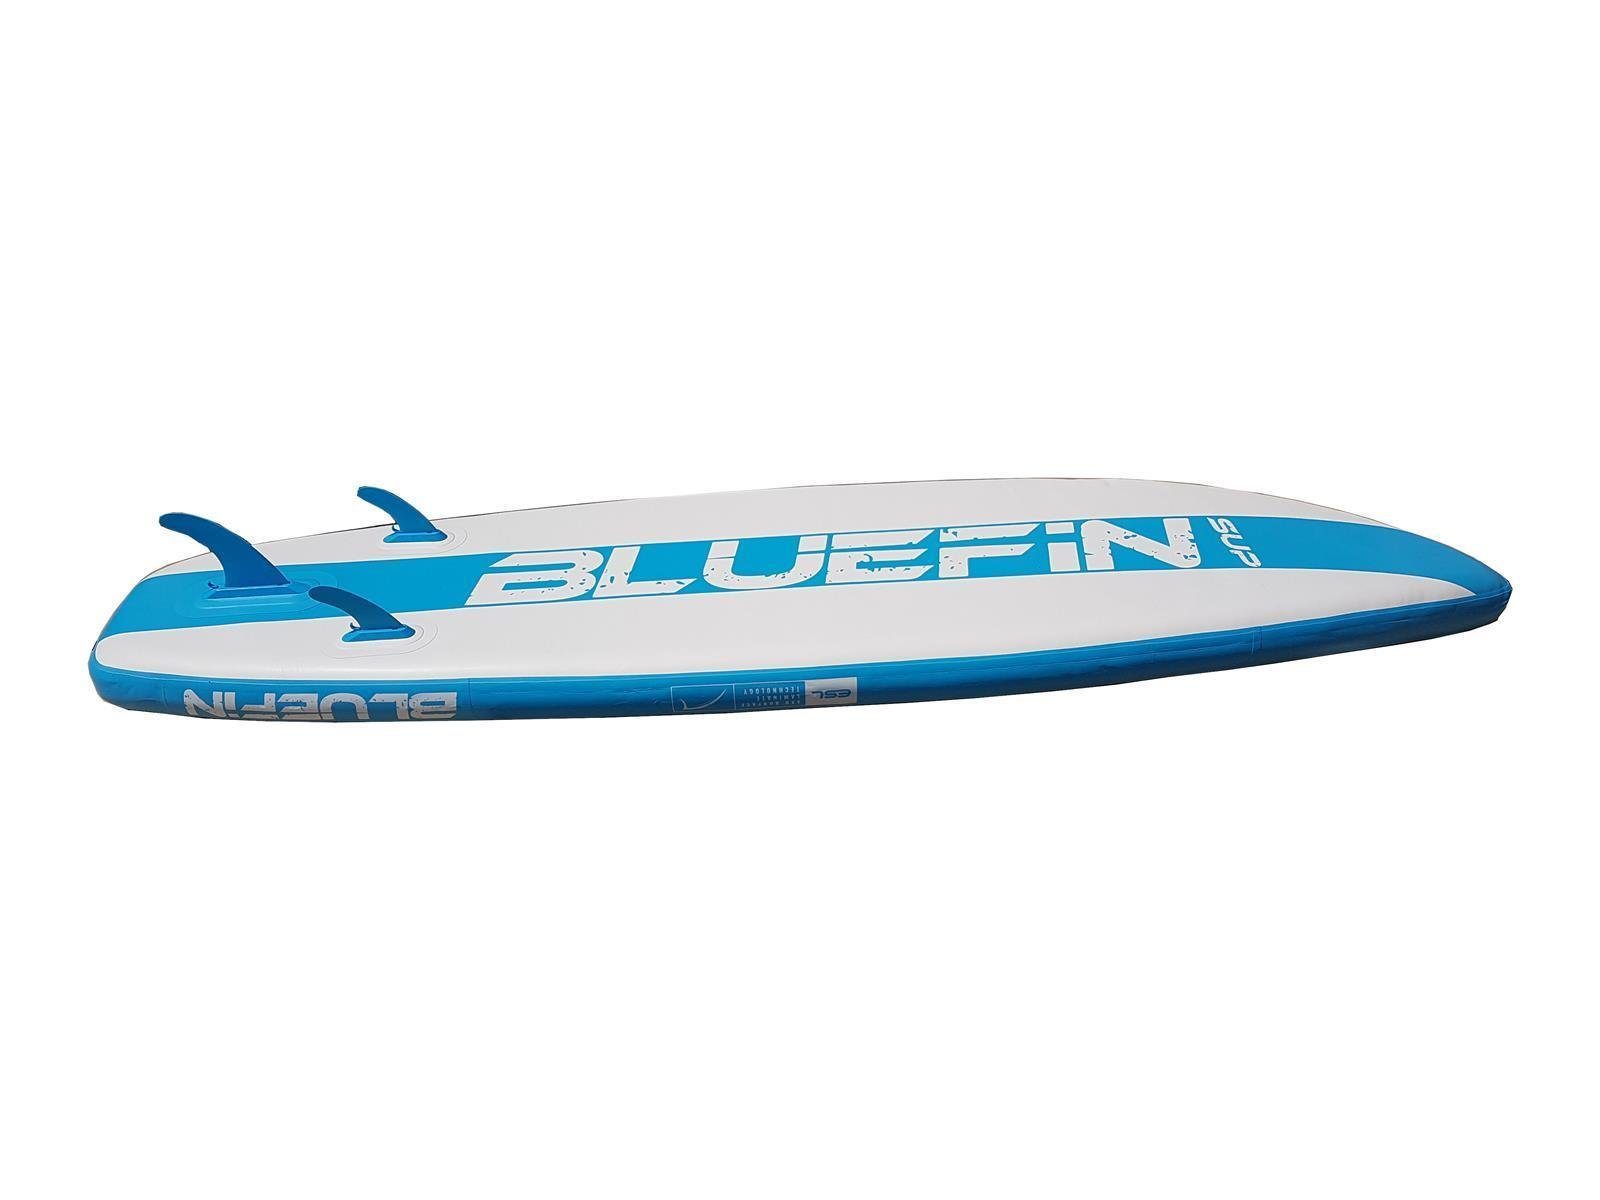 Cruise SUP SUP-Board 12' V3.0, Kit (366cm) mit Bluefin Kajak 2020 Modell (Set) Conversion Freizeit-Paddleboard,